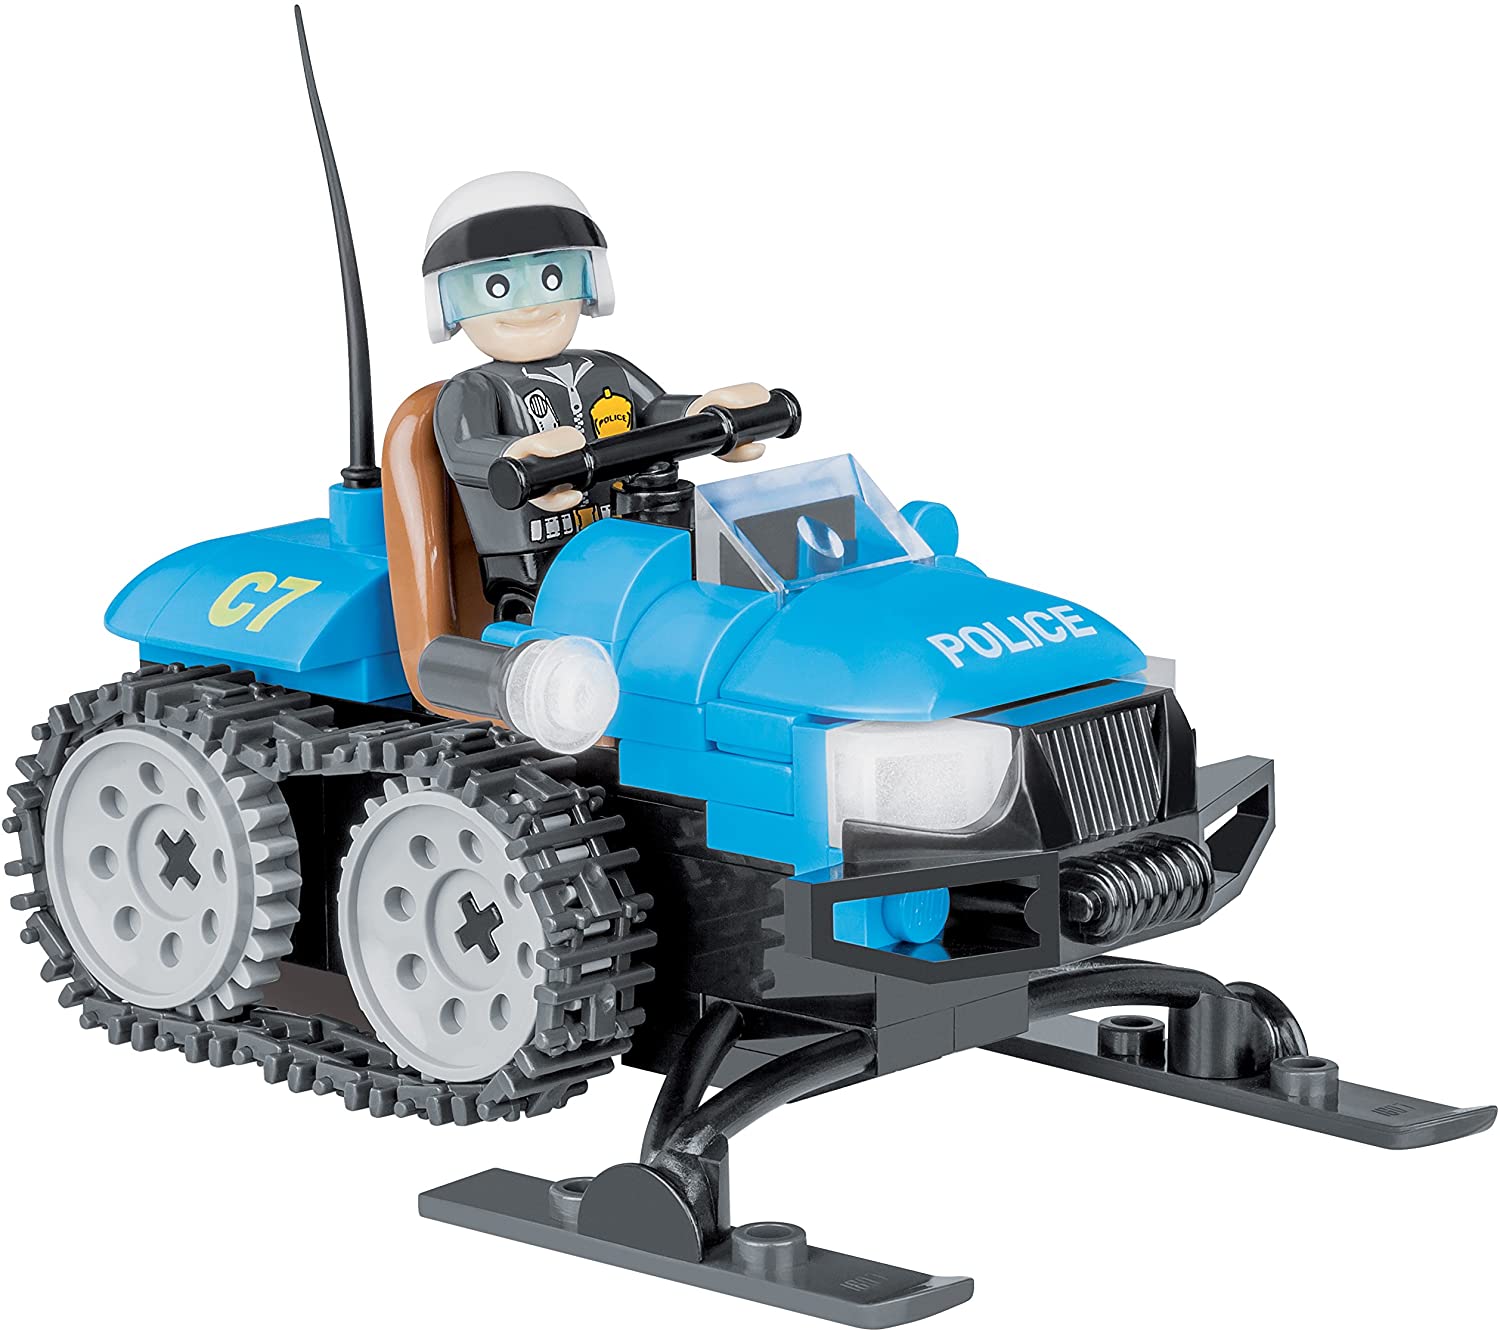 Cobi Cobi-1544 Action Town Police Snowmobile (100 Pcs) Toys Assorted